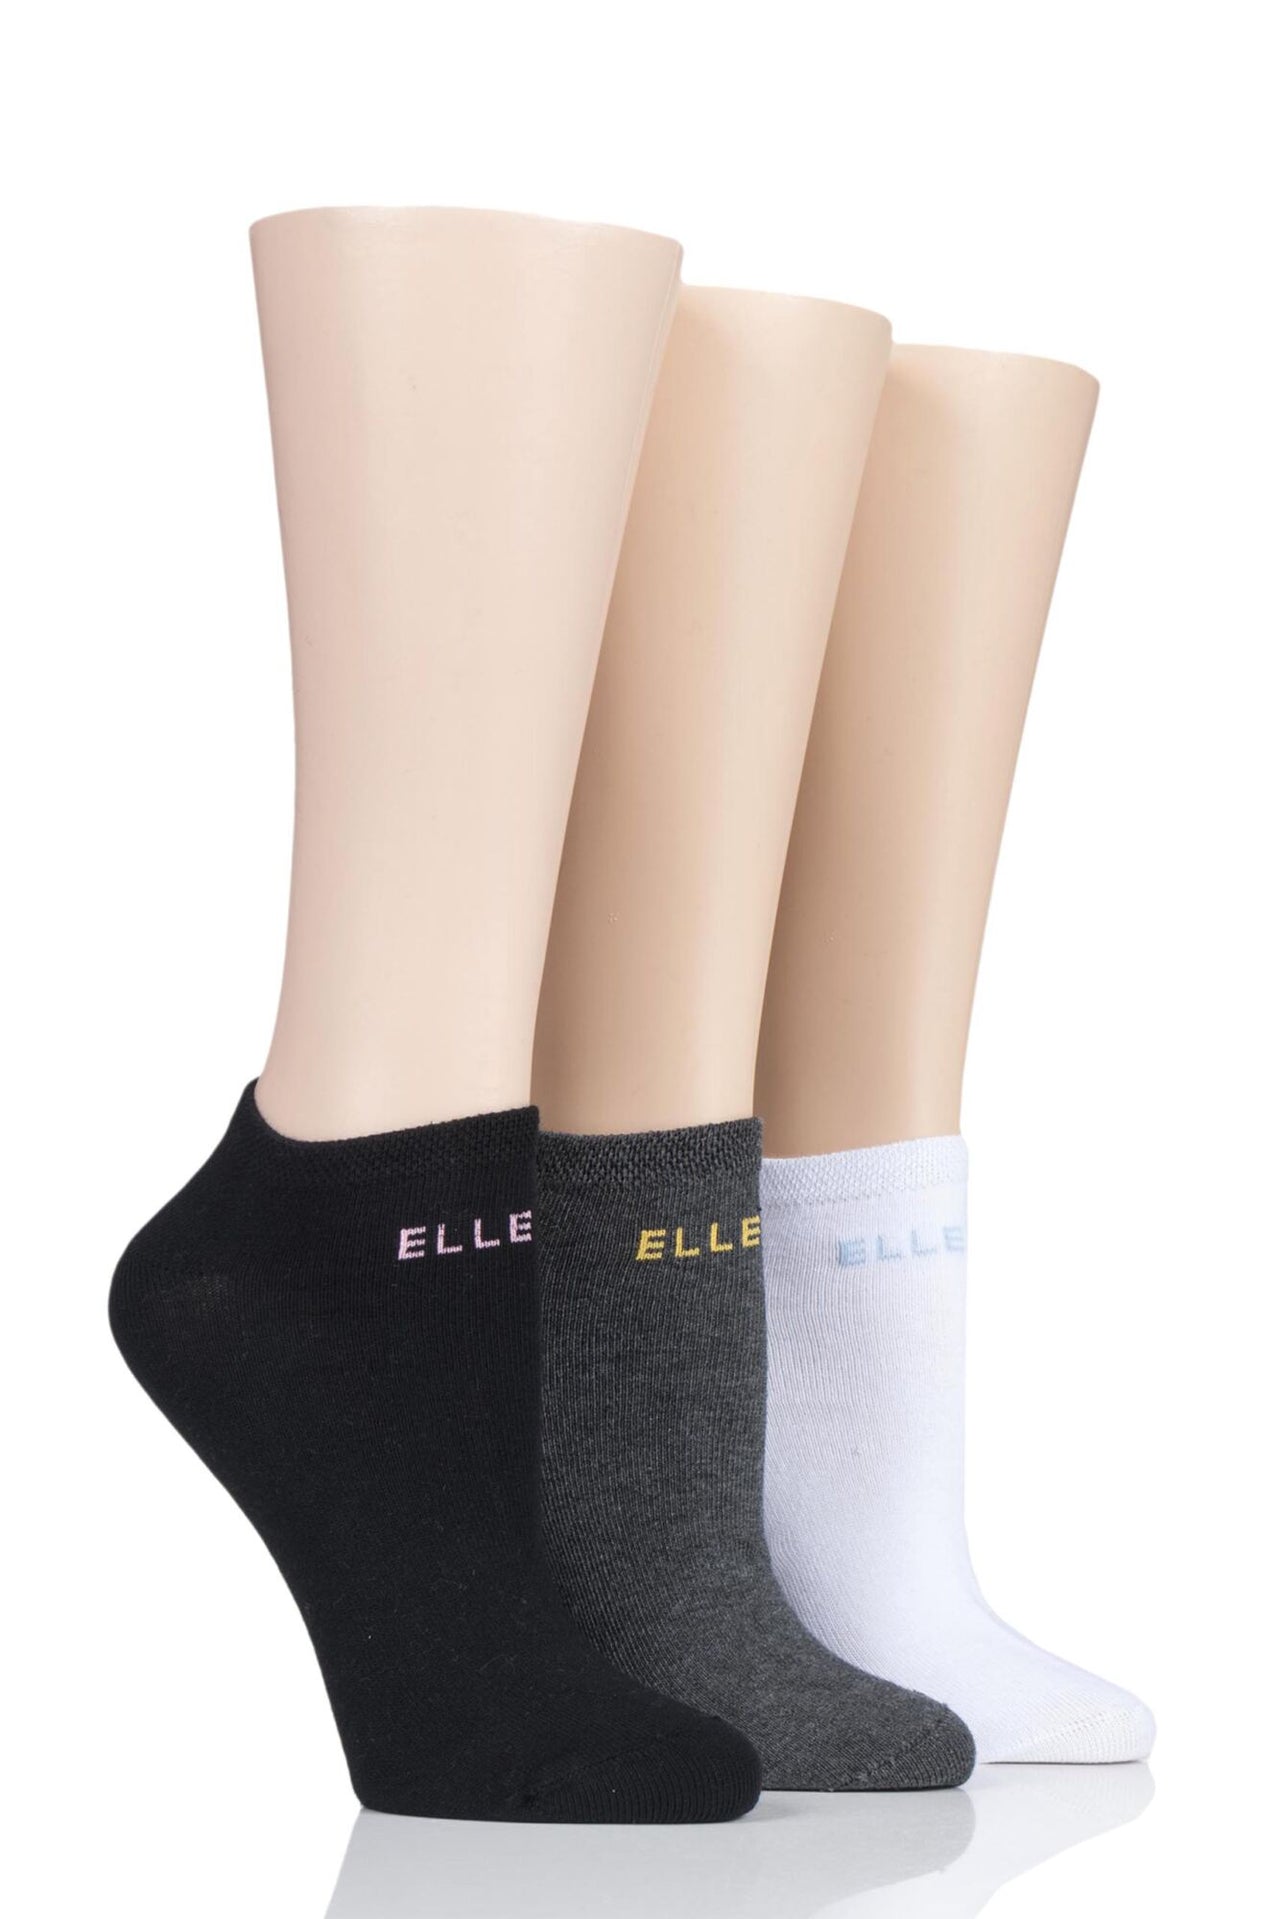 Elle No-Show Cotton Mix Trainer Black/Grey/White Socks